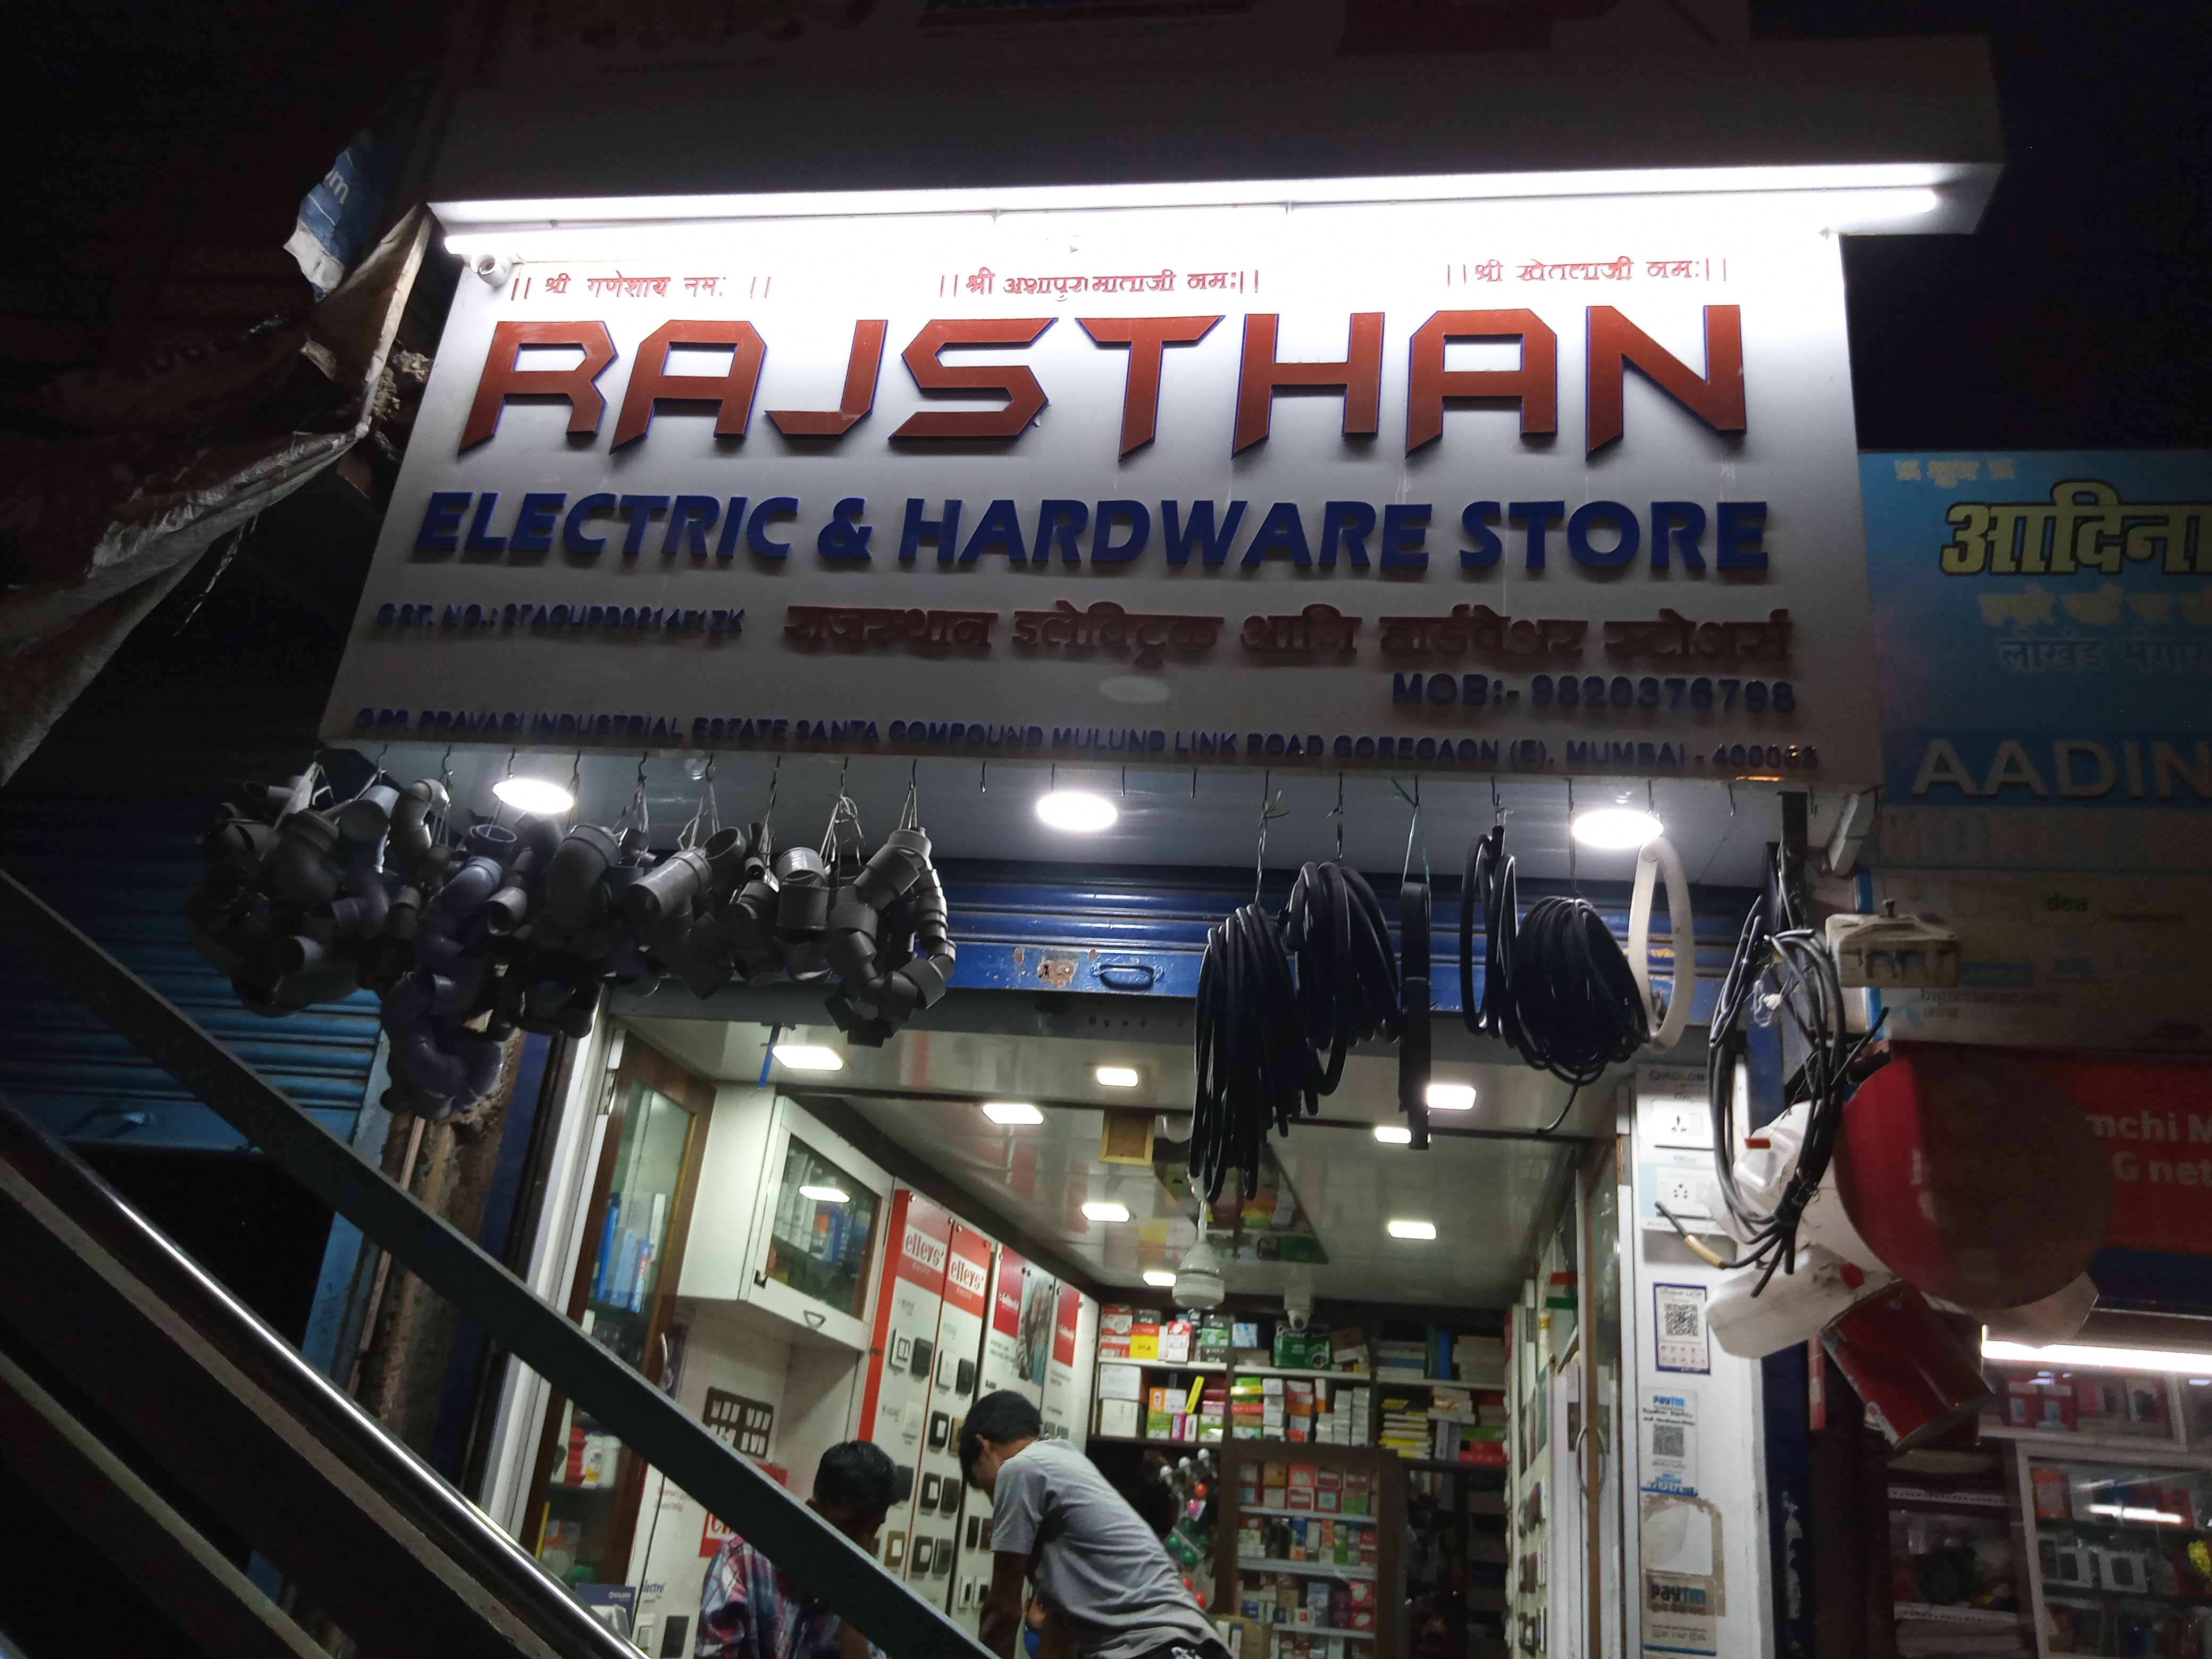 Rajasthan Electric & Hardware Stores